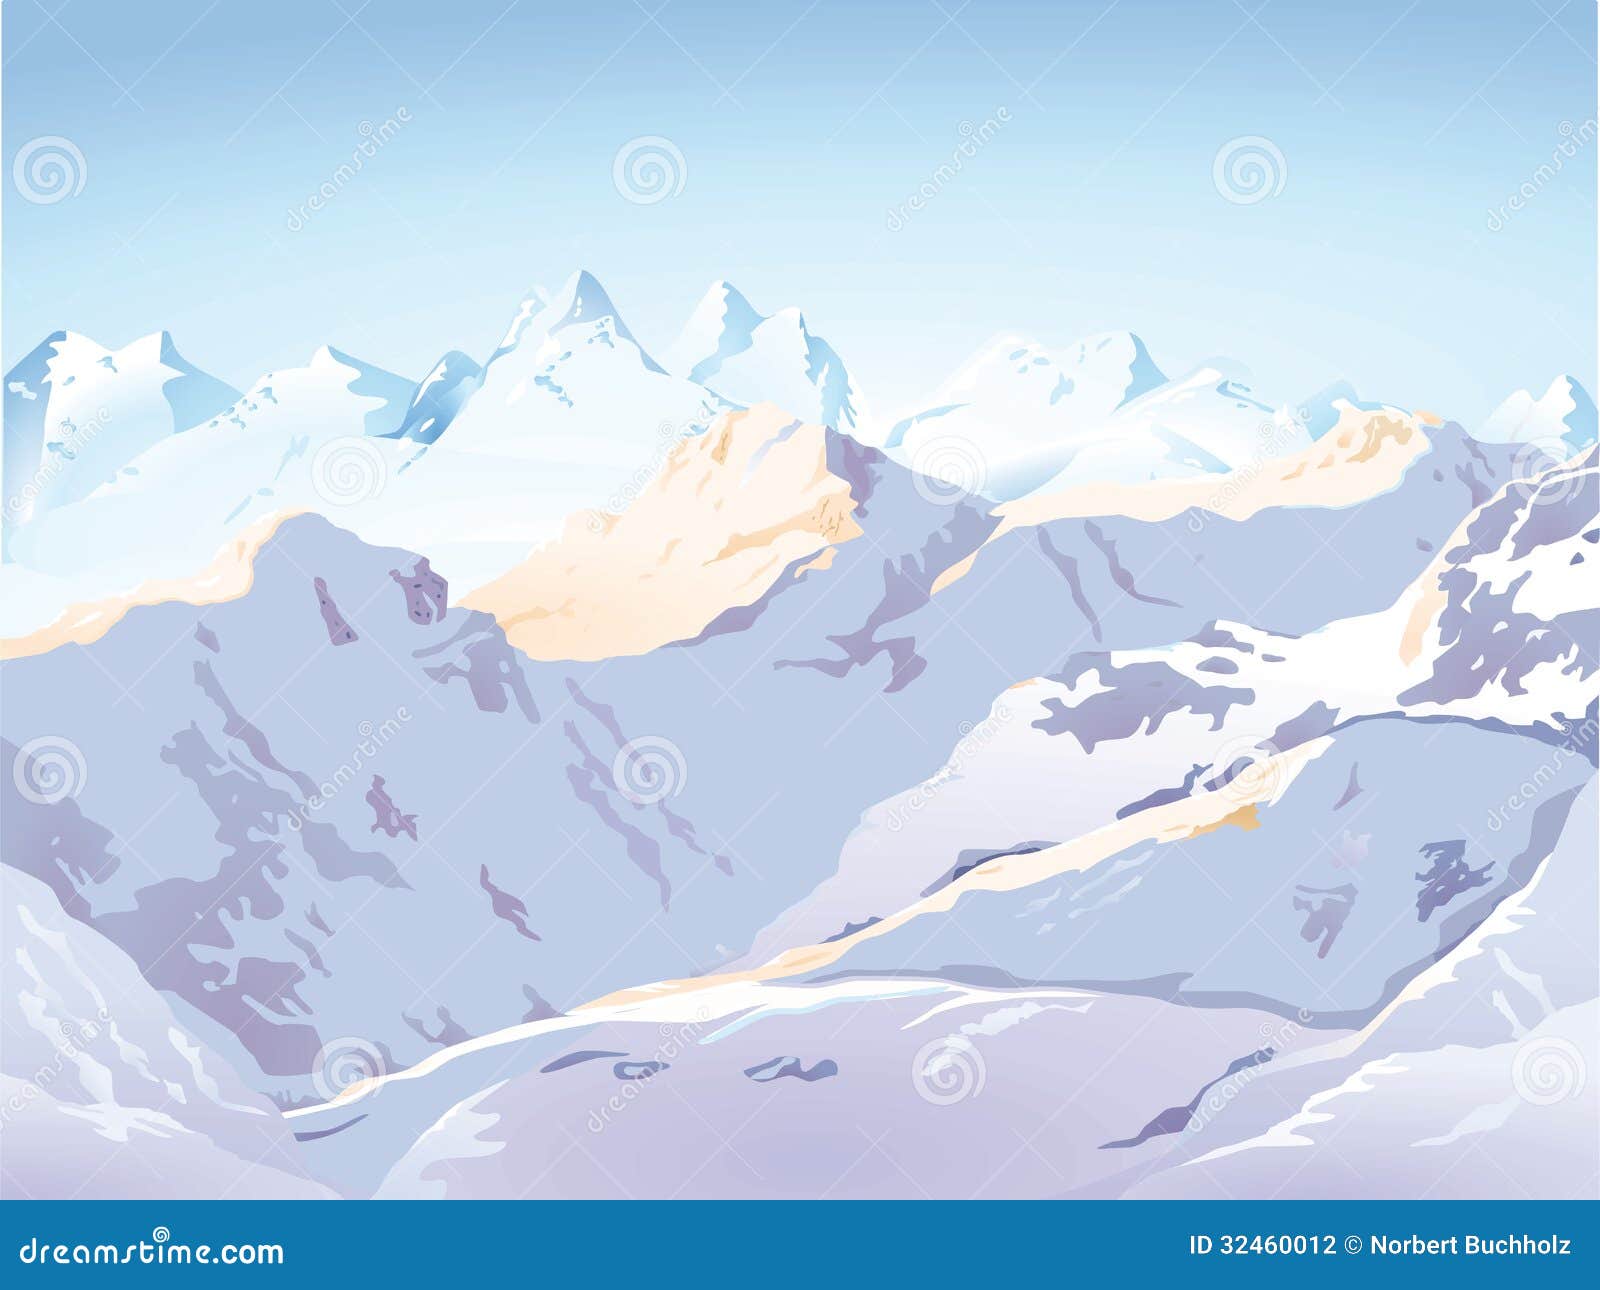 winter mountain clipart - photo #17